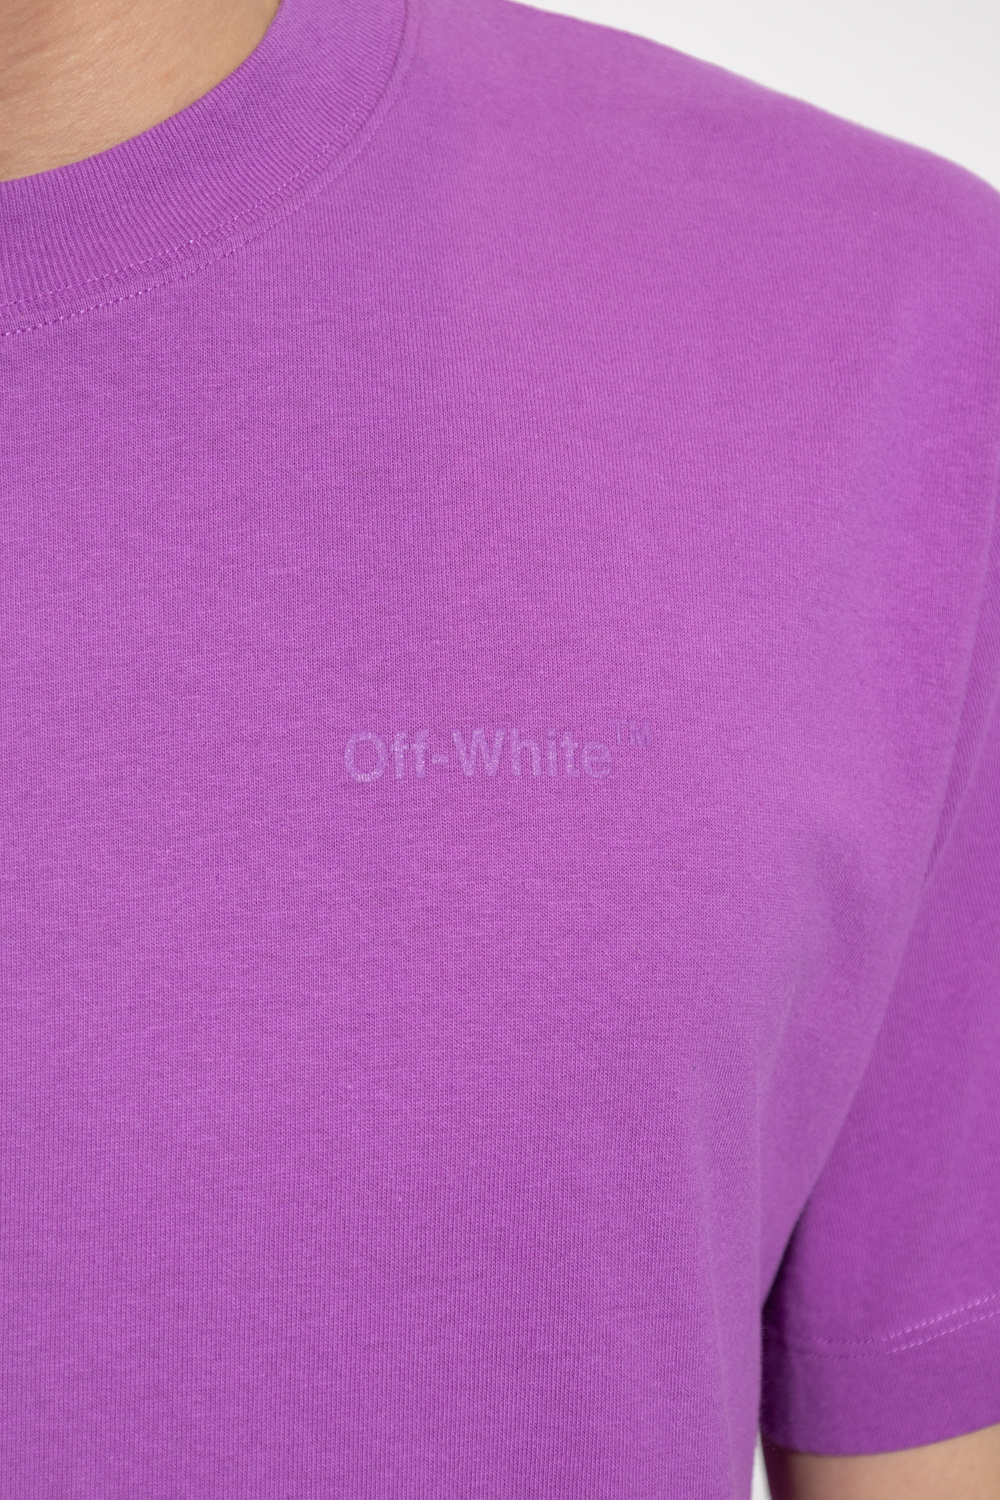 Off-White lauren ralph lauren floral cotton blend sweater